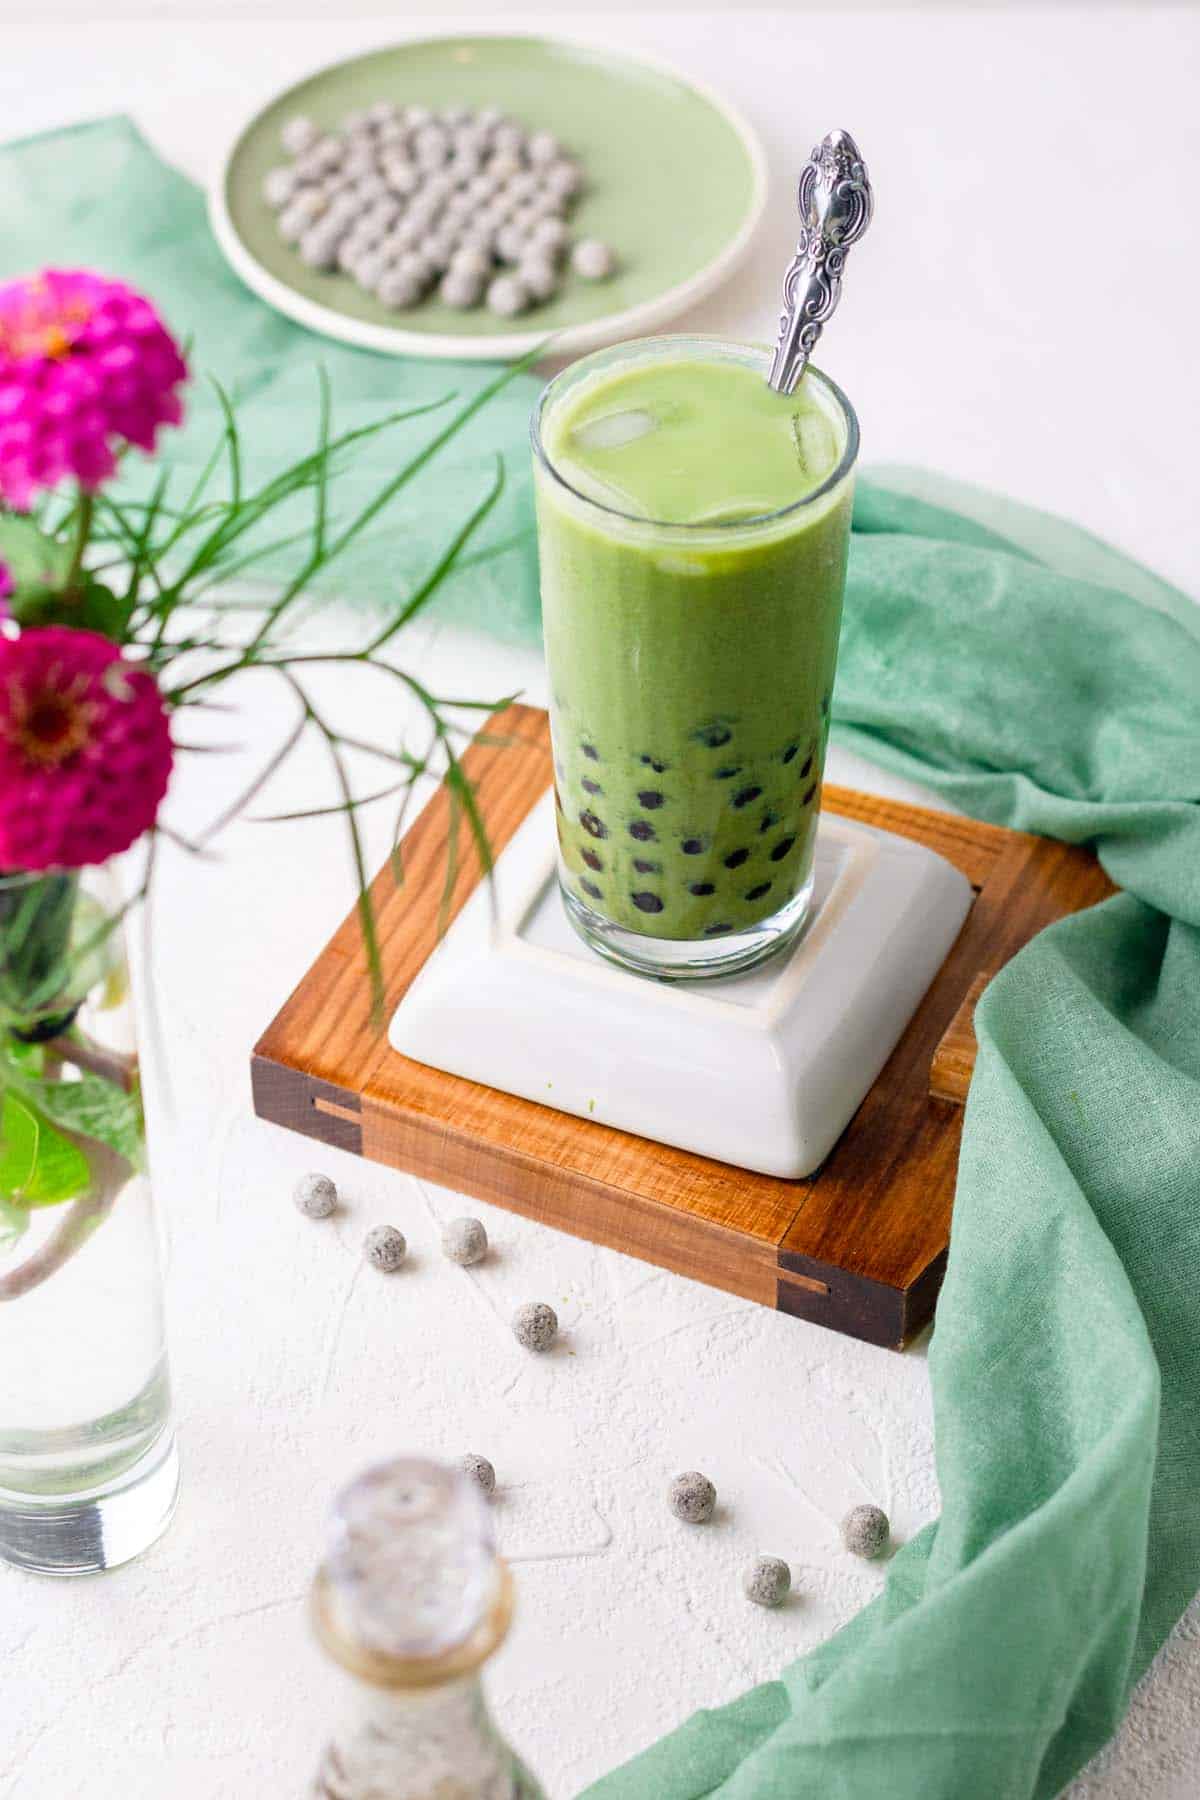 homemade green tea boba with tapioca pearls